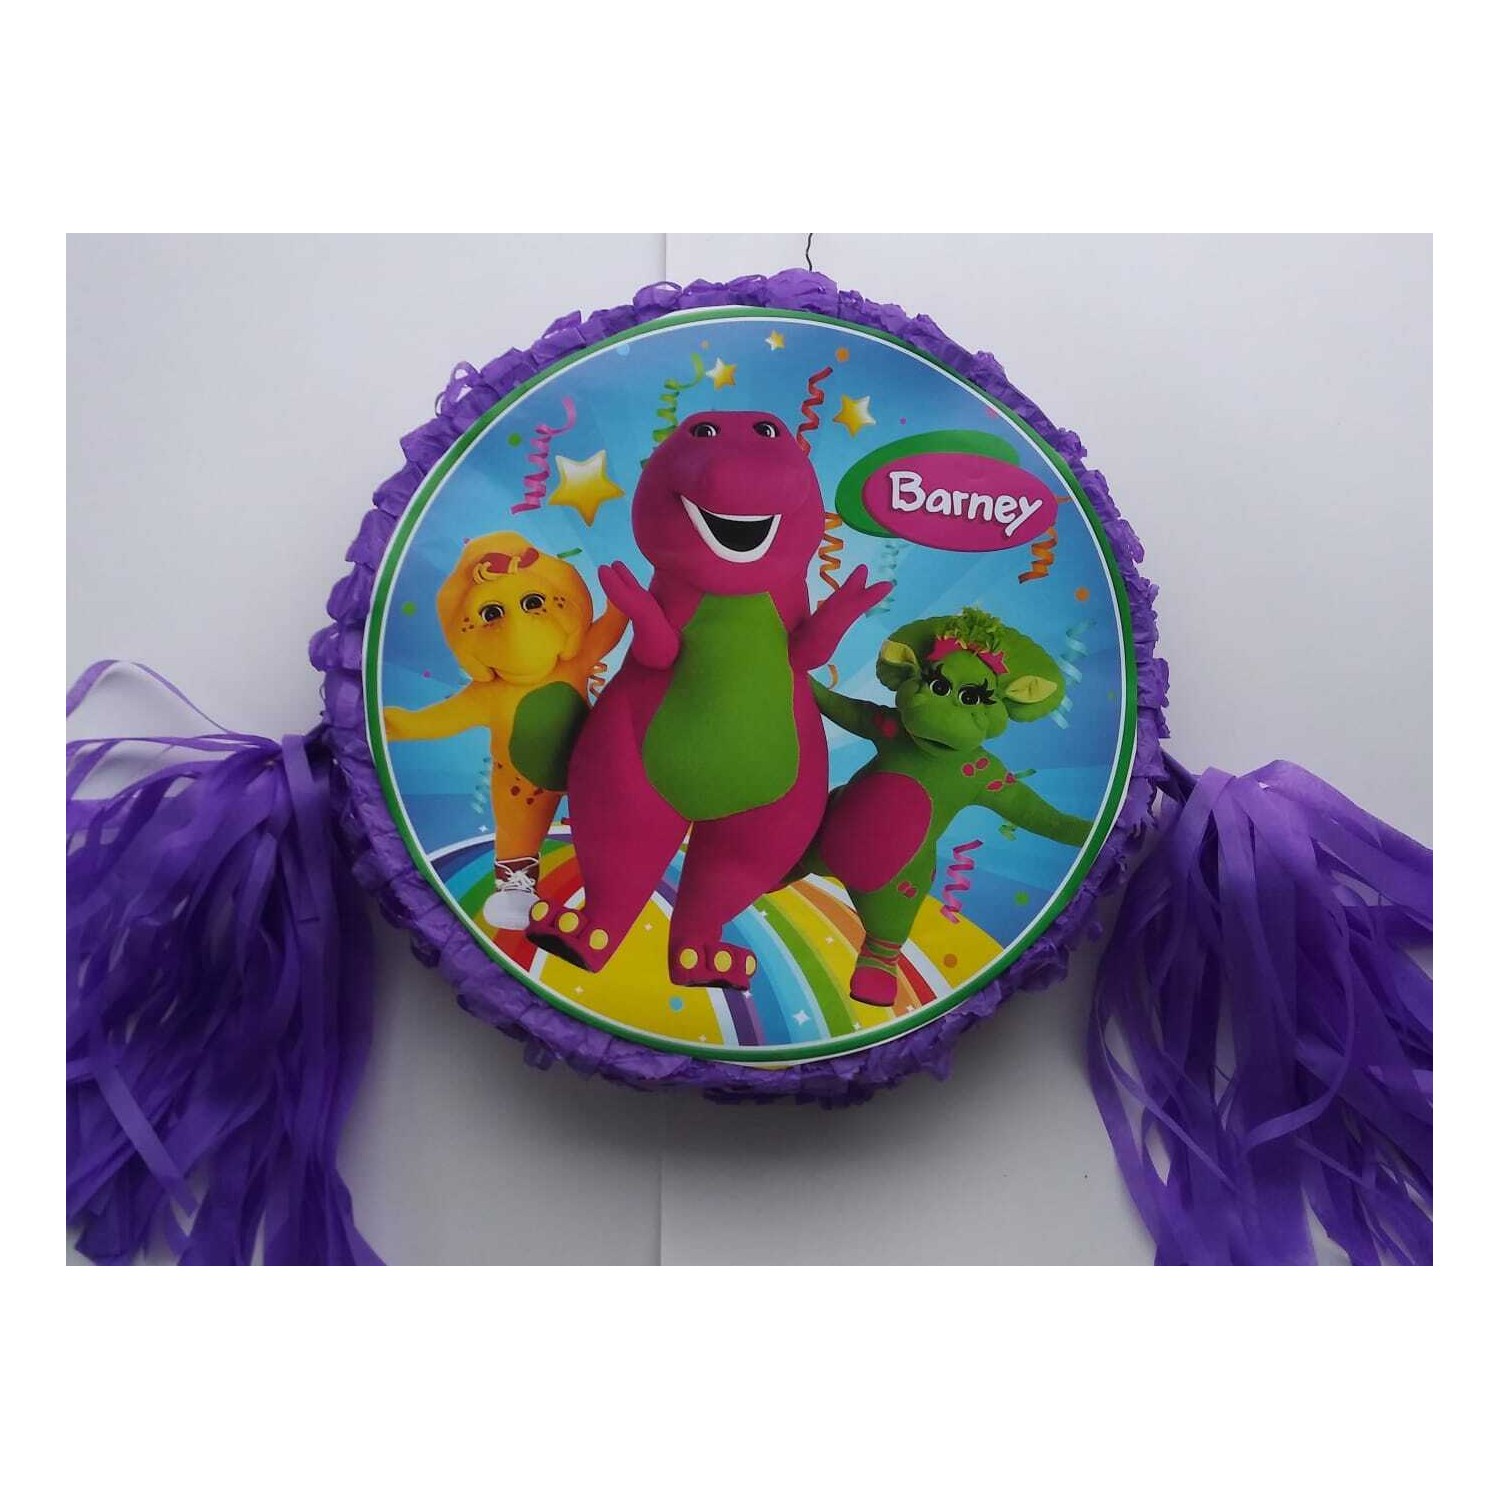 Barney Piñata Birthday Party Game party Decoration photo prop, - ibspot.com